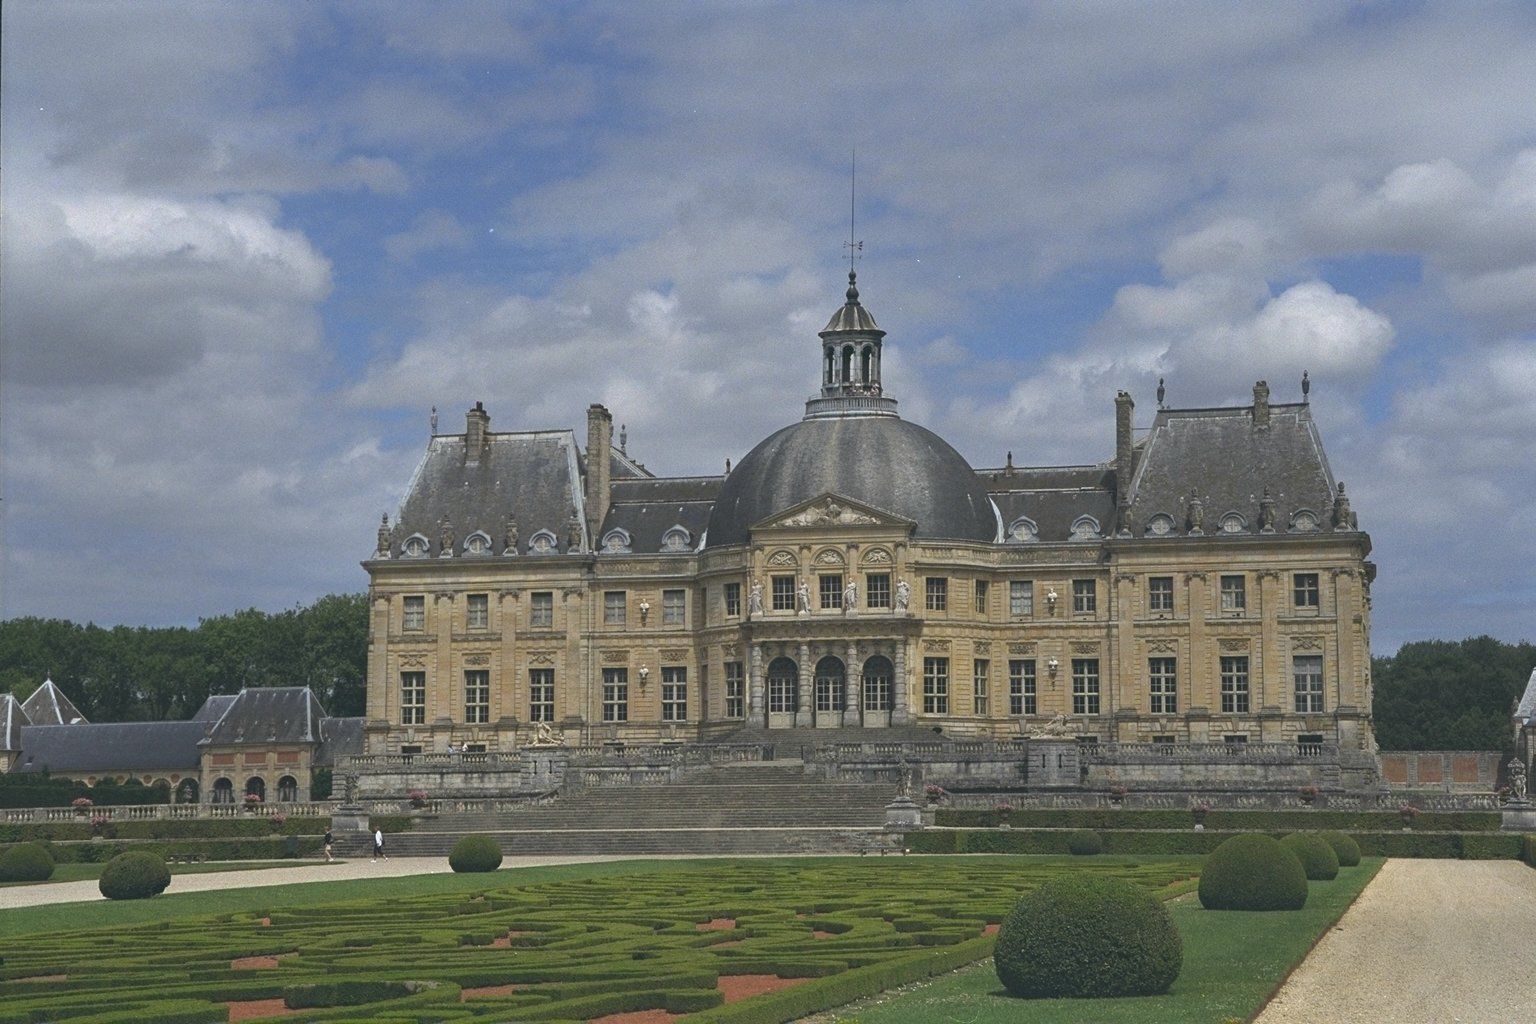 Chateau Vaux Le Vicomte, as seen in 1979's Moonraker